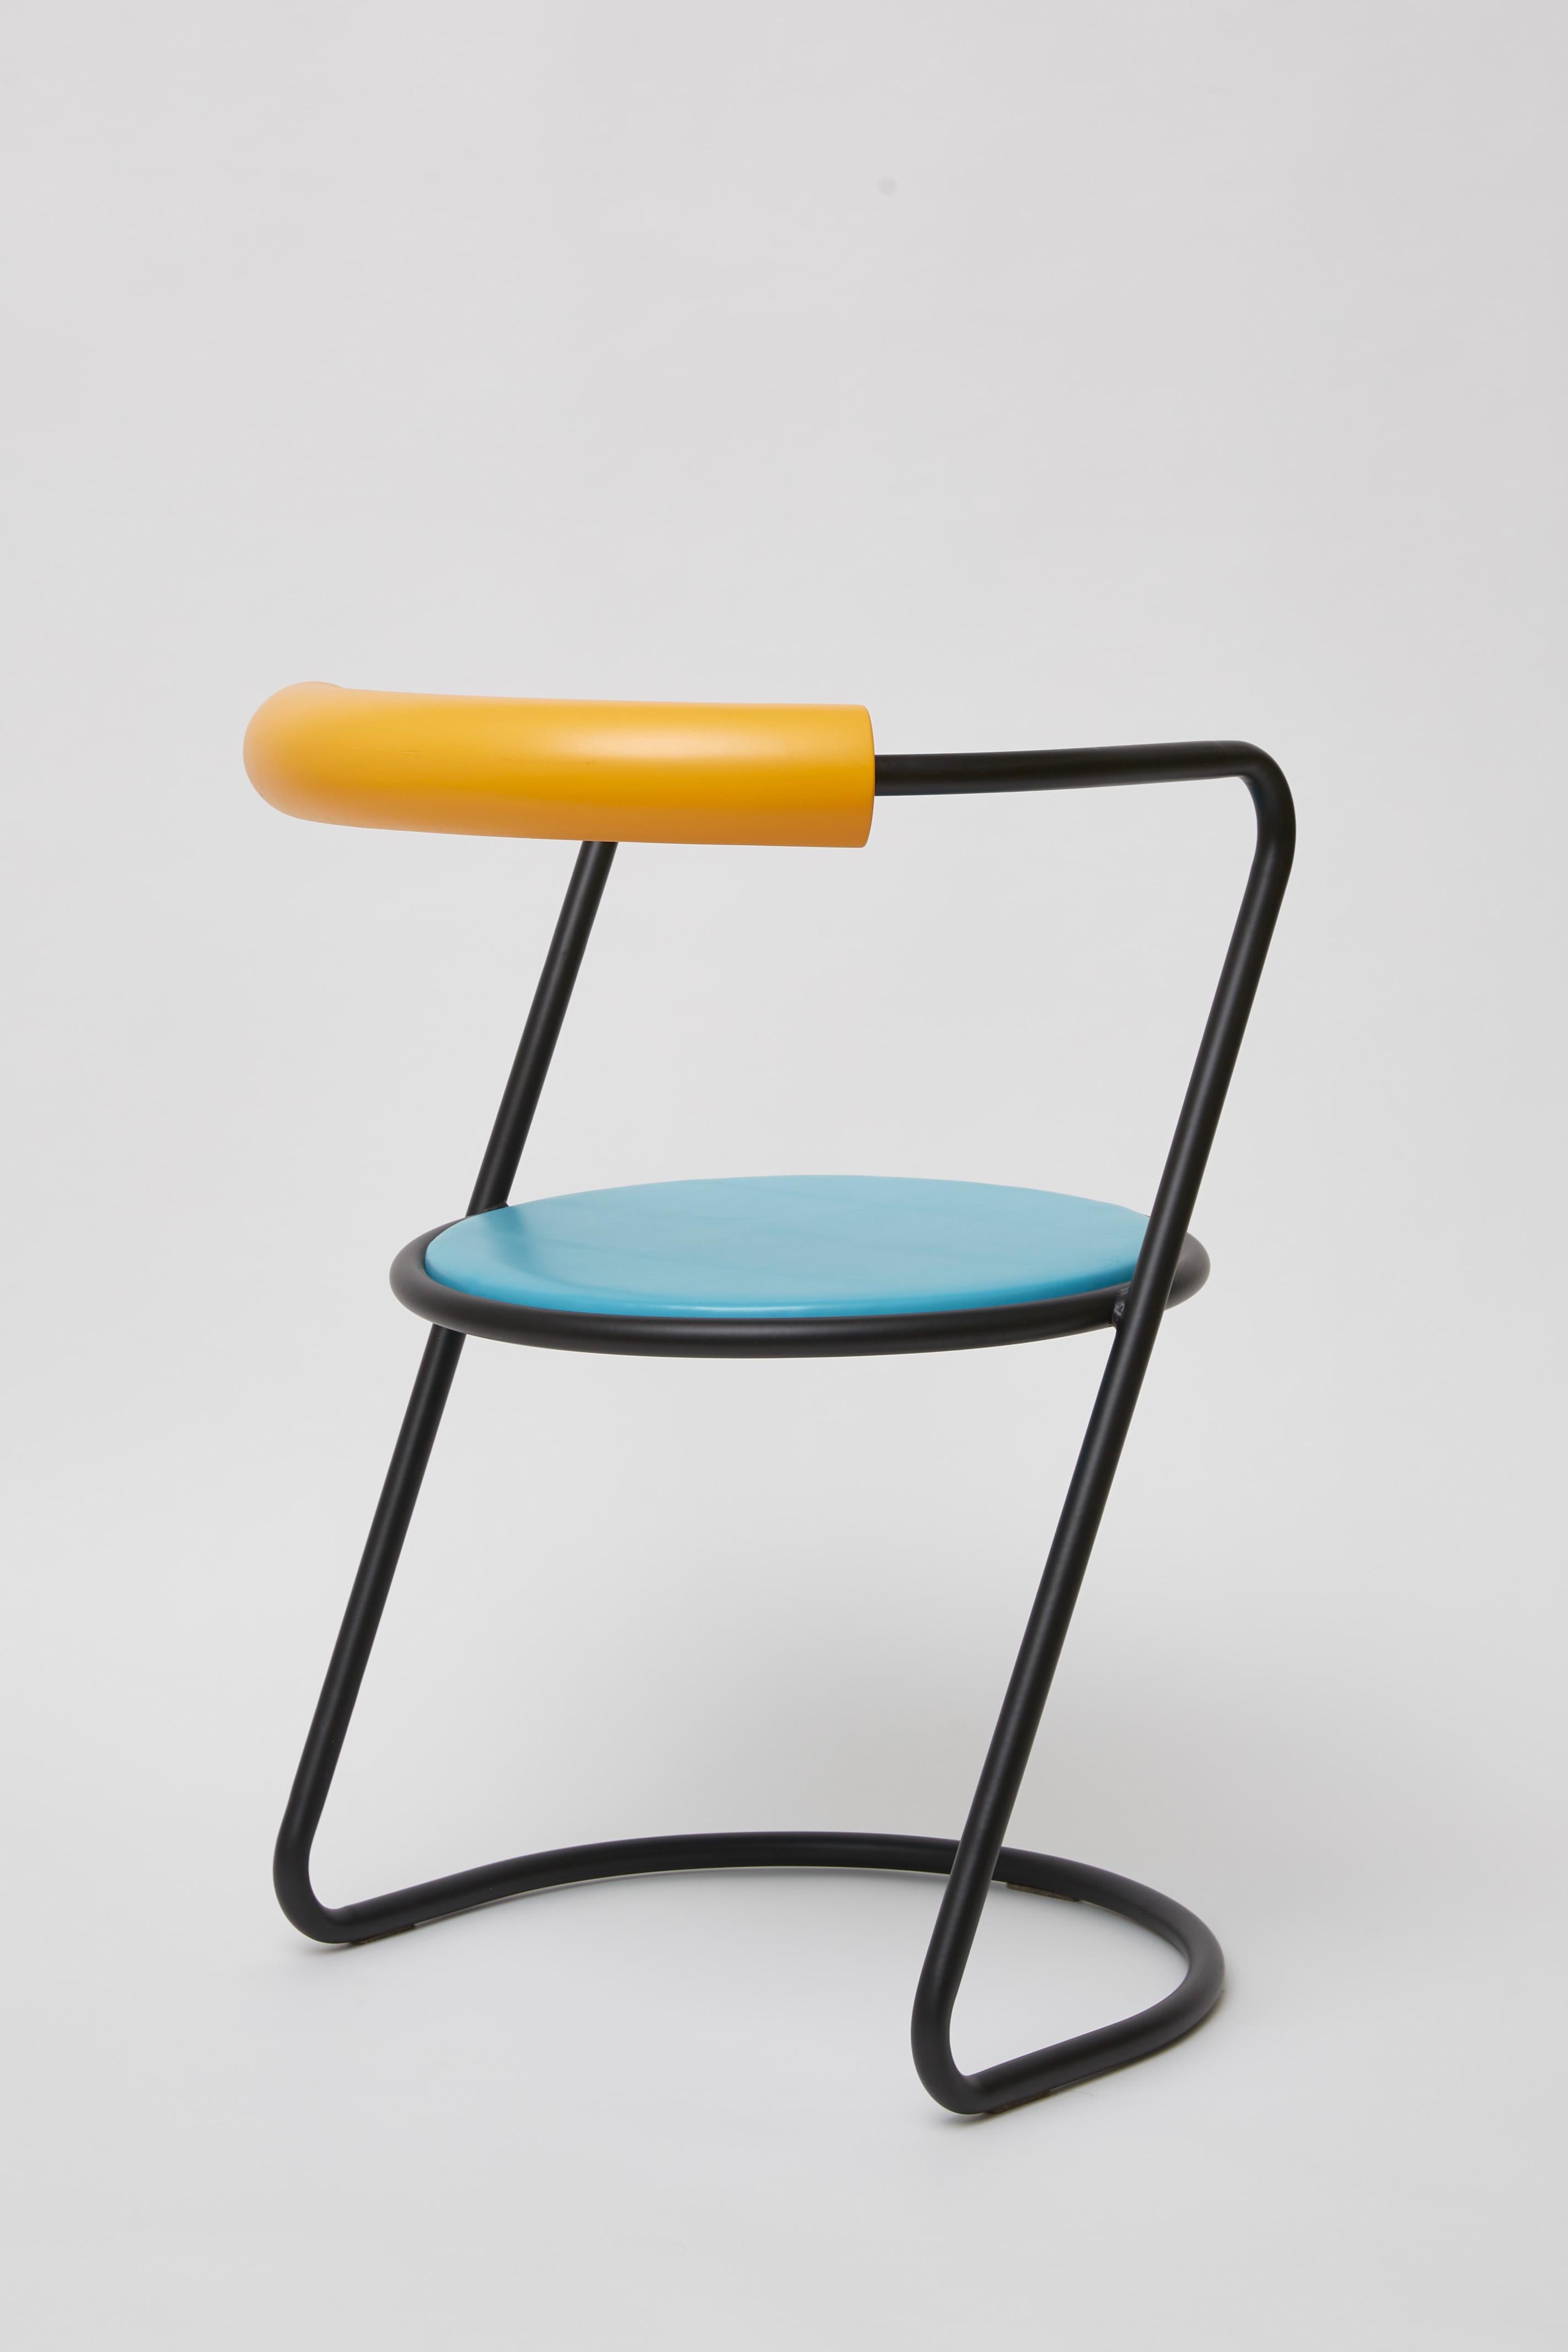 Contemporary Z-Disk Chair, Black, Orange & Light Blue For Sale